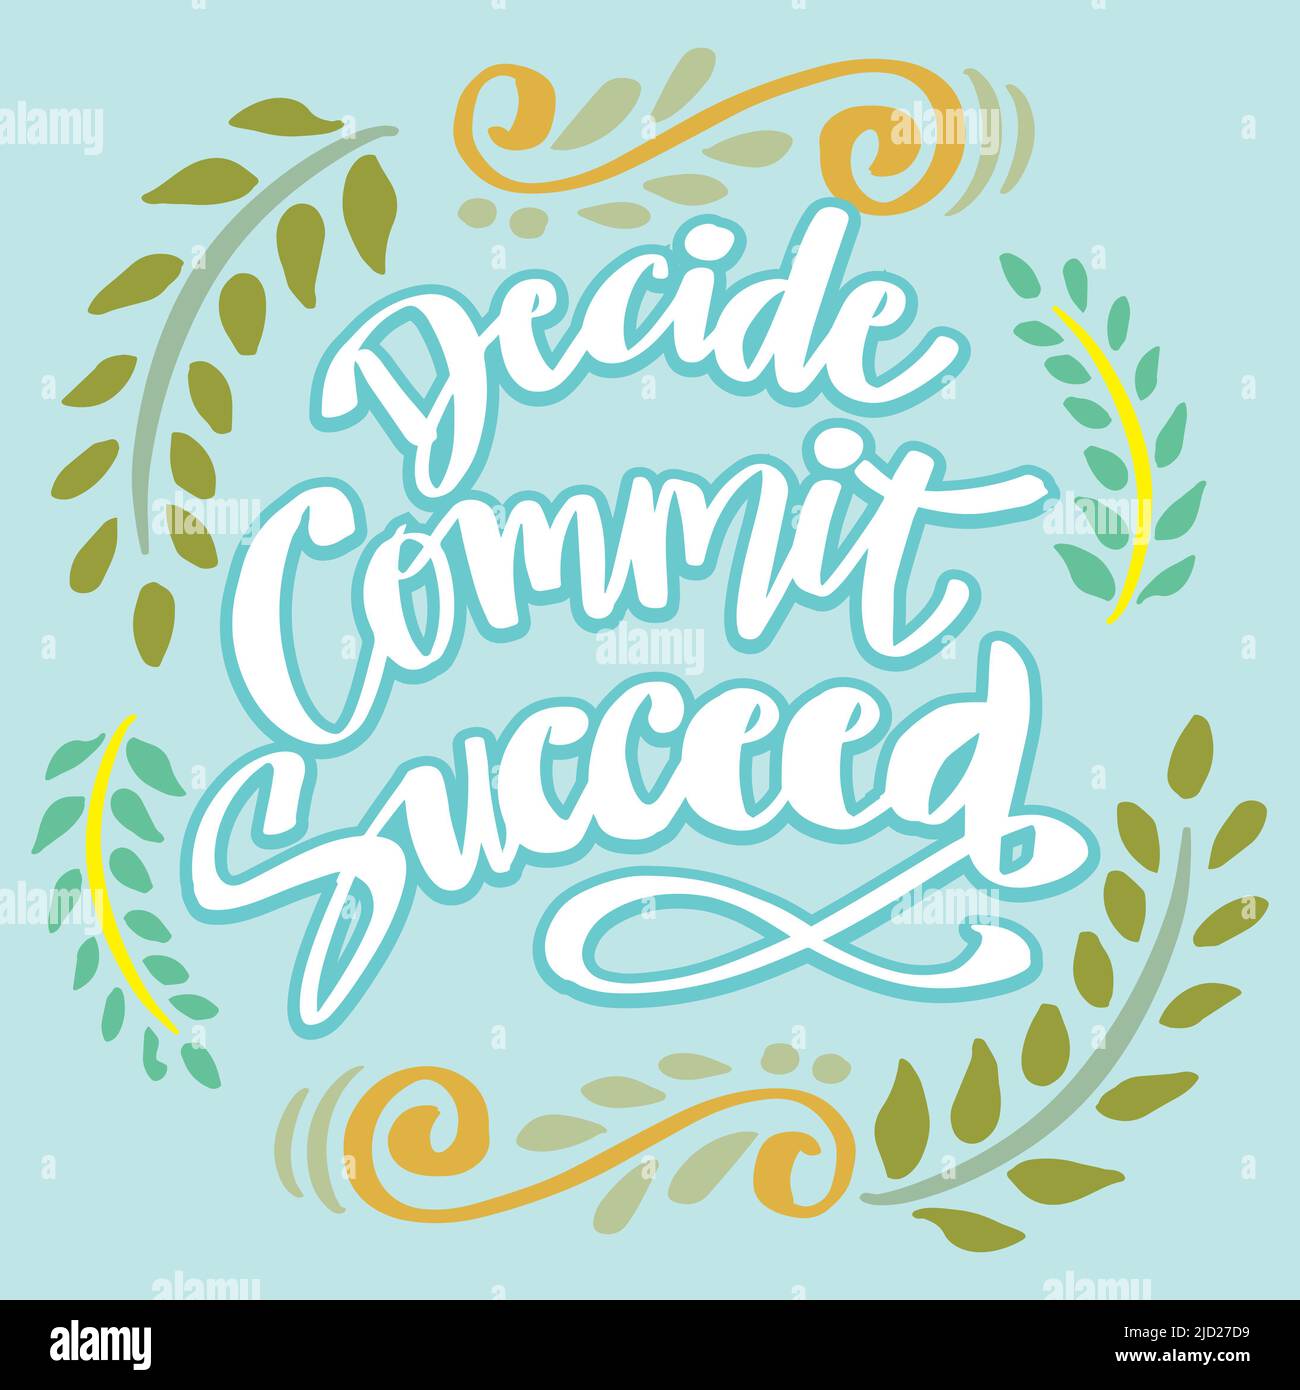 Decide commit succeed. Slogan concept. Stock Photo